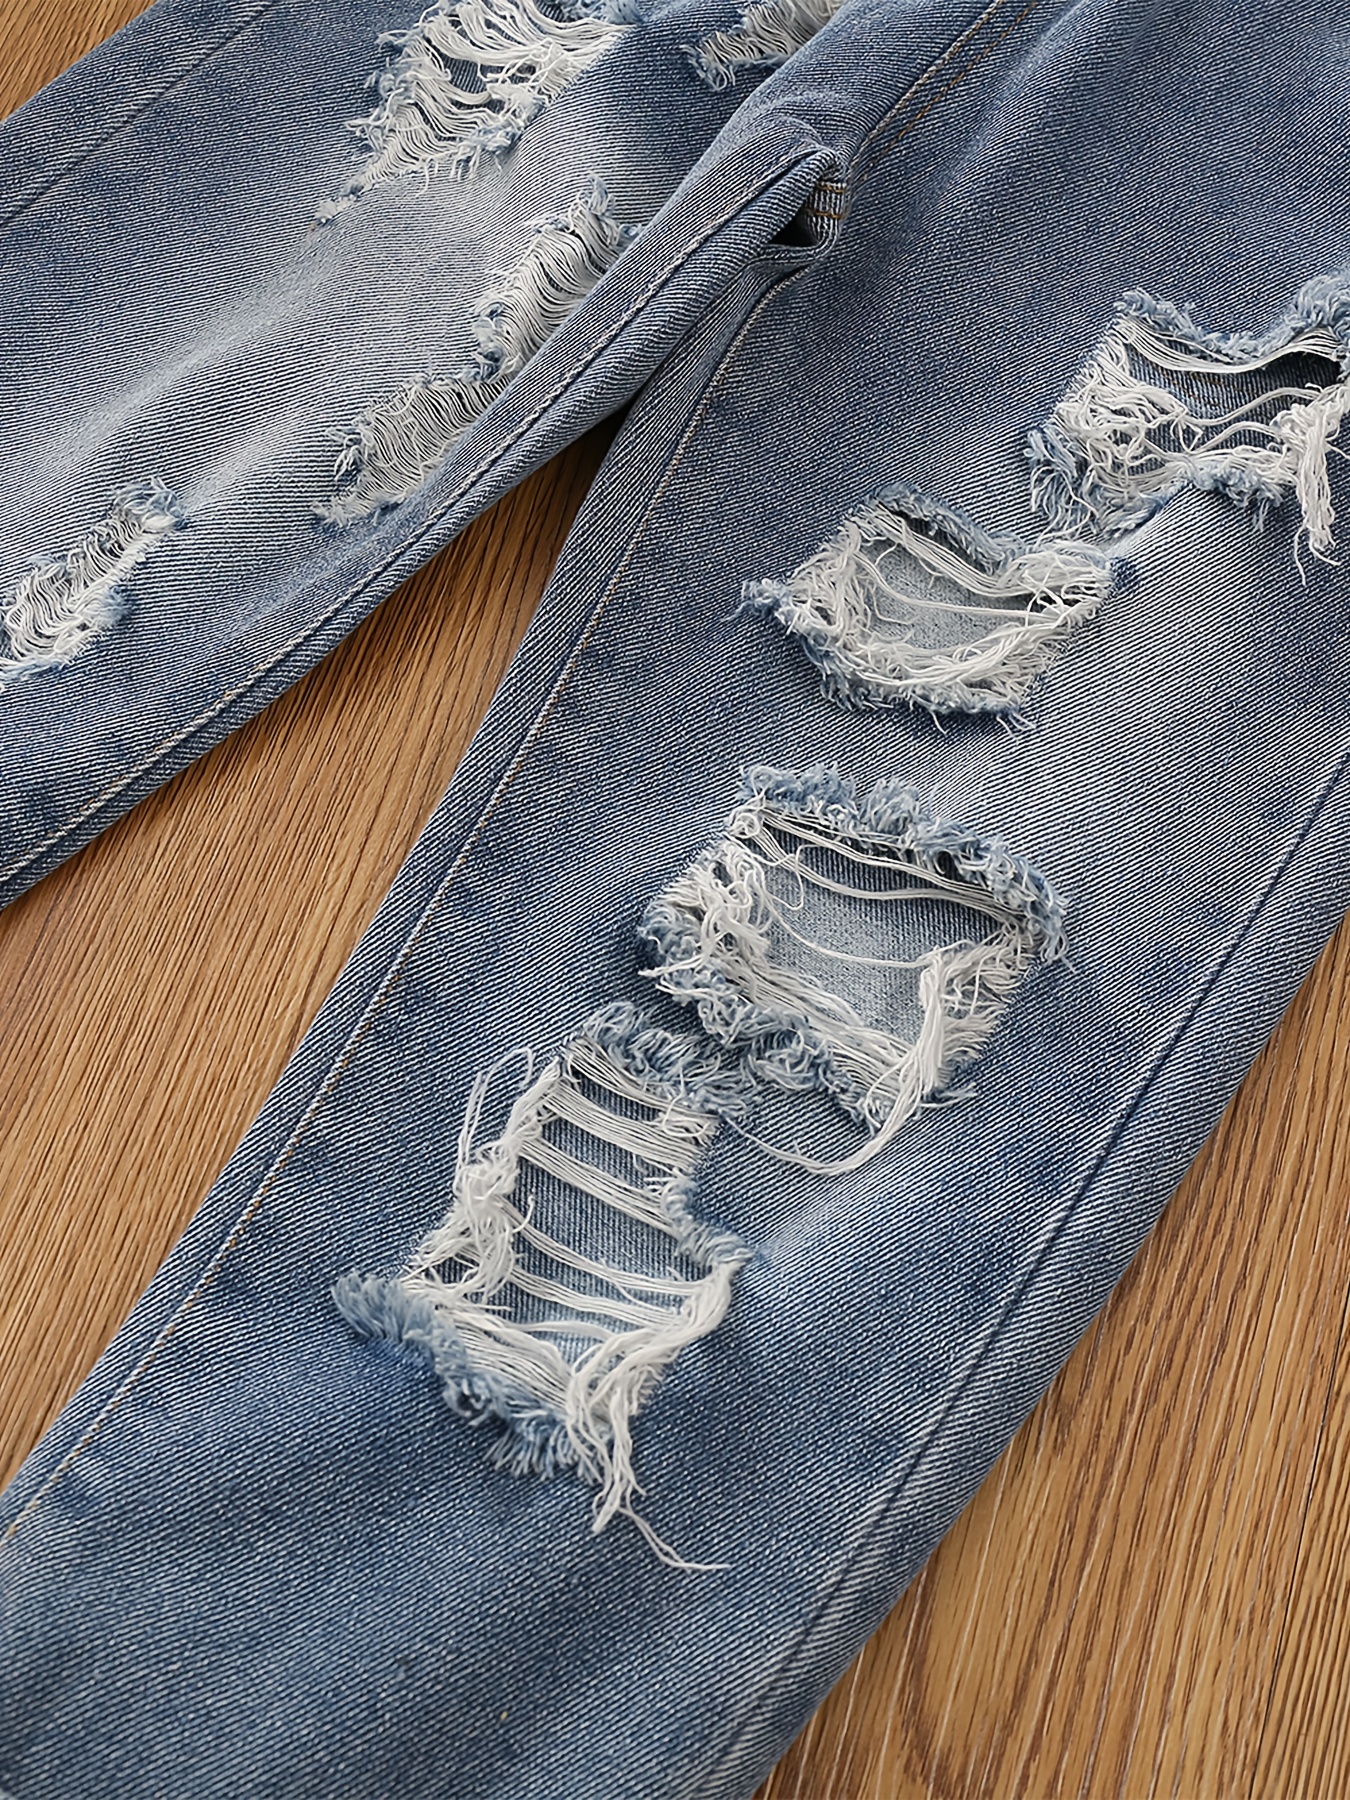 Kid Girls' Ripped Jeans Elastic Waist Regular Fit Casual Tapered Denim Pants